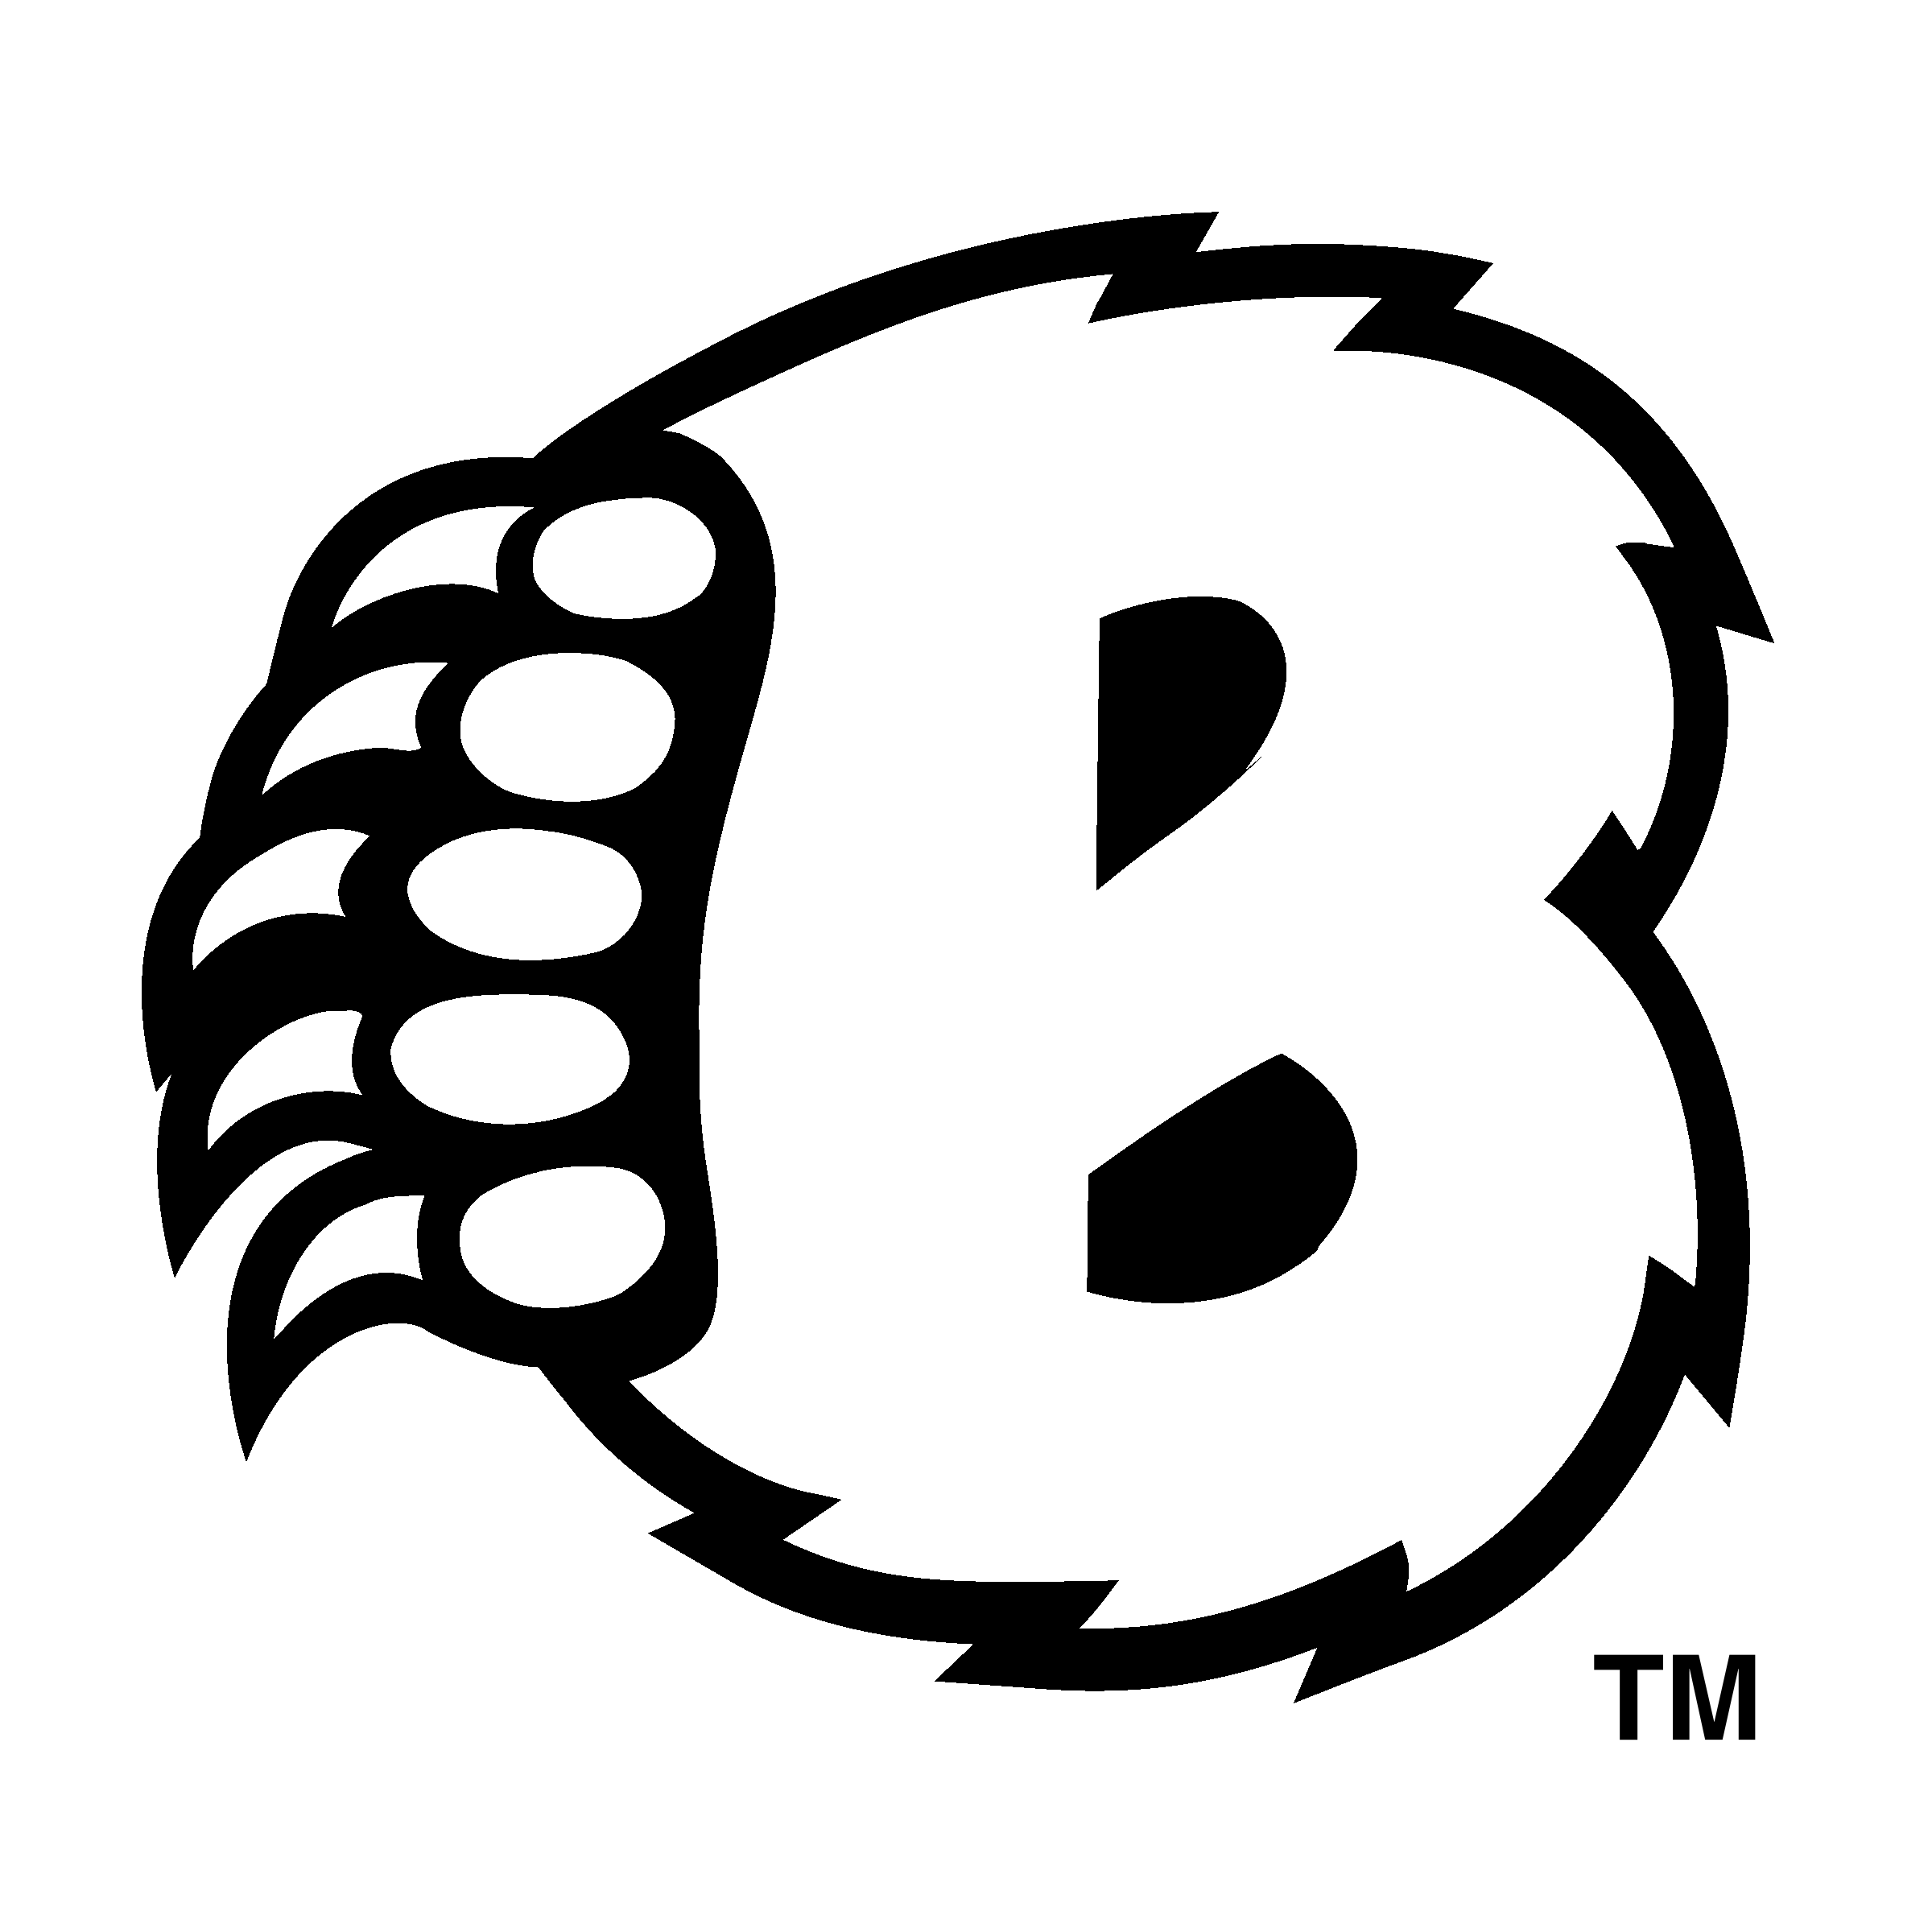 Baylor Logo PNG Image - PNG All | PNG All